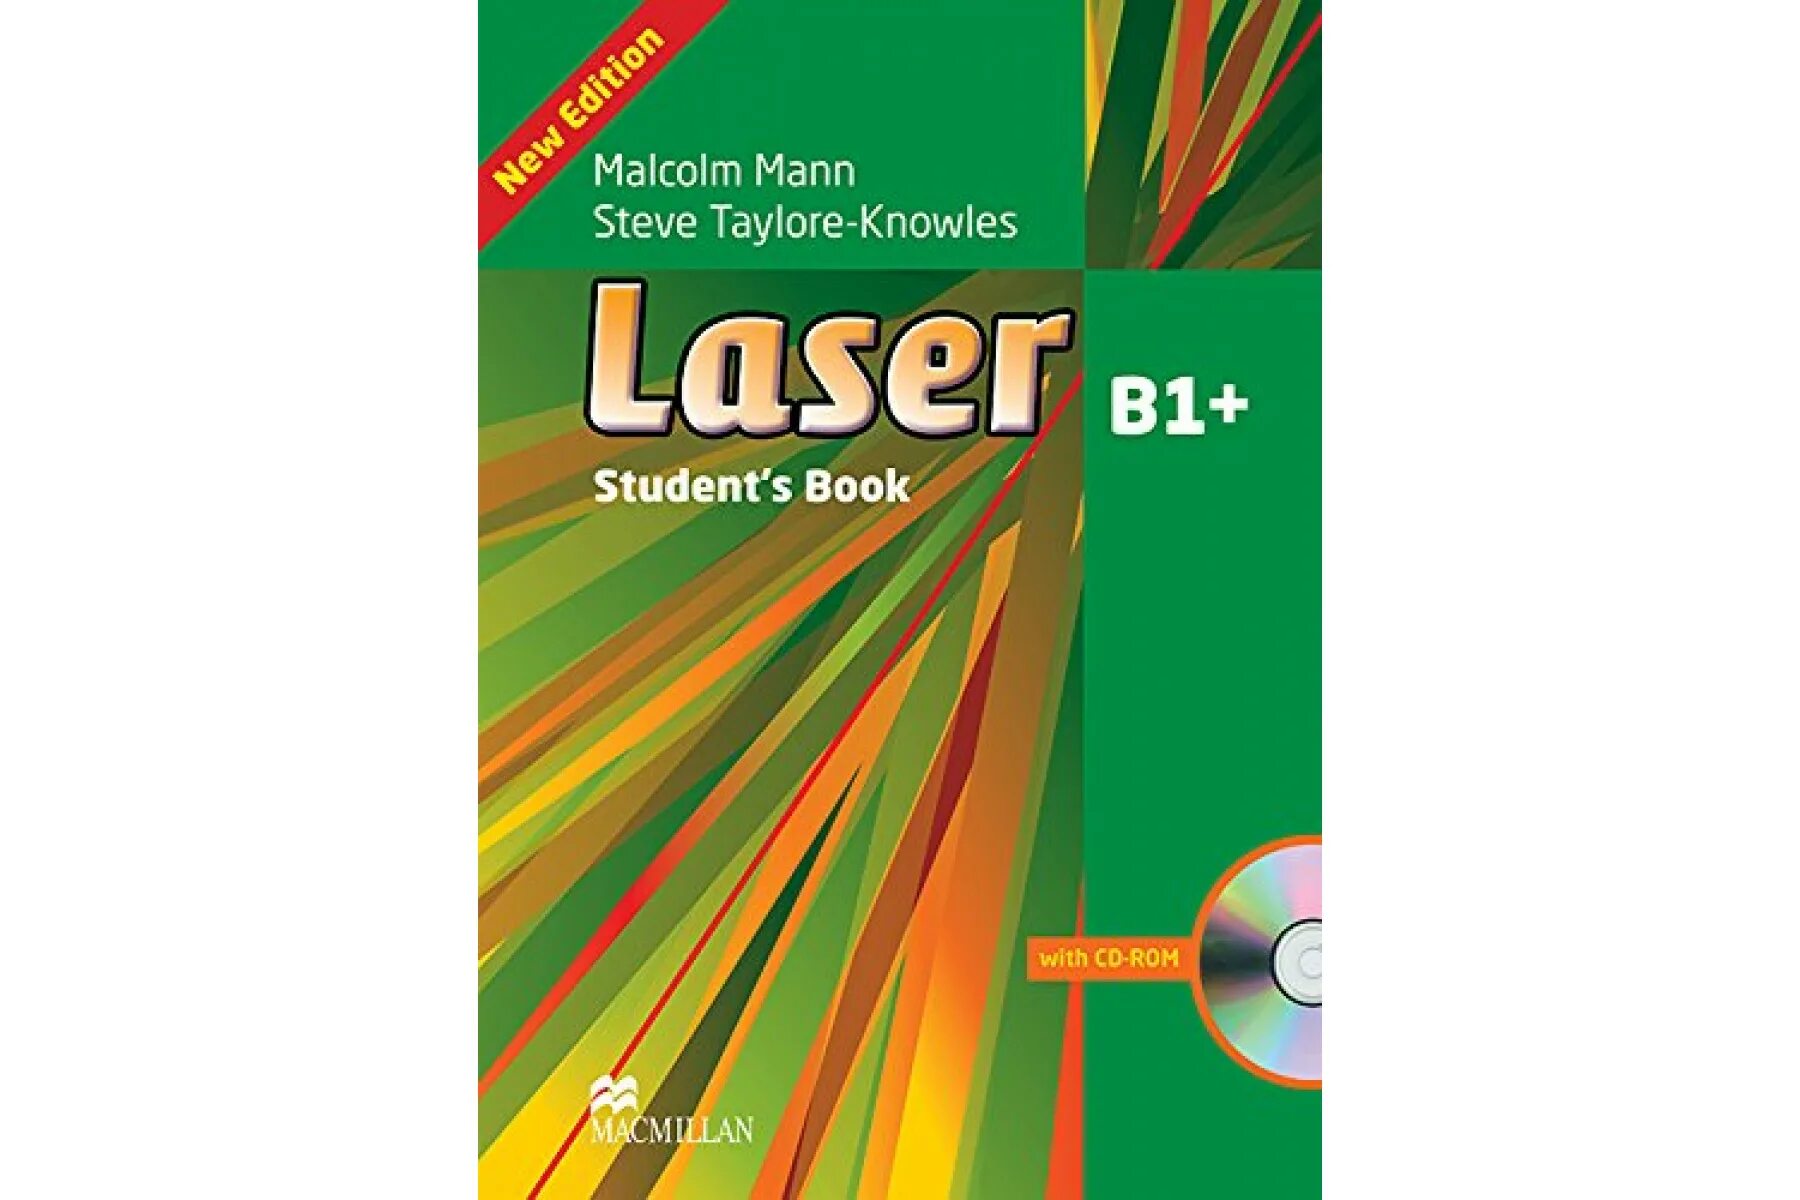 Student book b1 keys. Malcolm Mann Laser b1 student's book. Laser b1+ students book ответы revision. Malcolm Mann Steve Taylore-Knowles Laser b1 student's book ответы. Laser b1 student's book гдз.